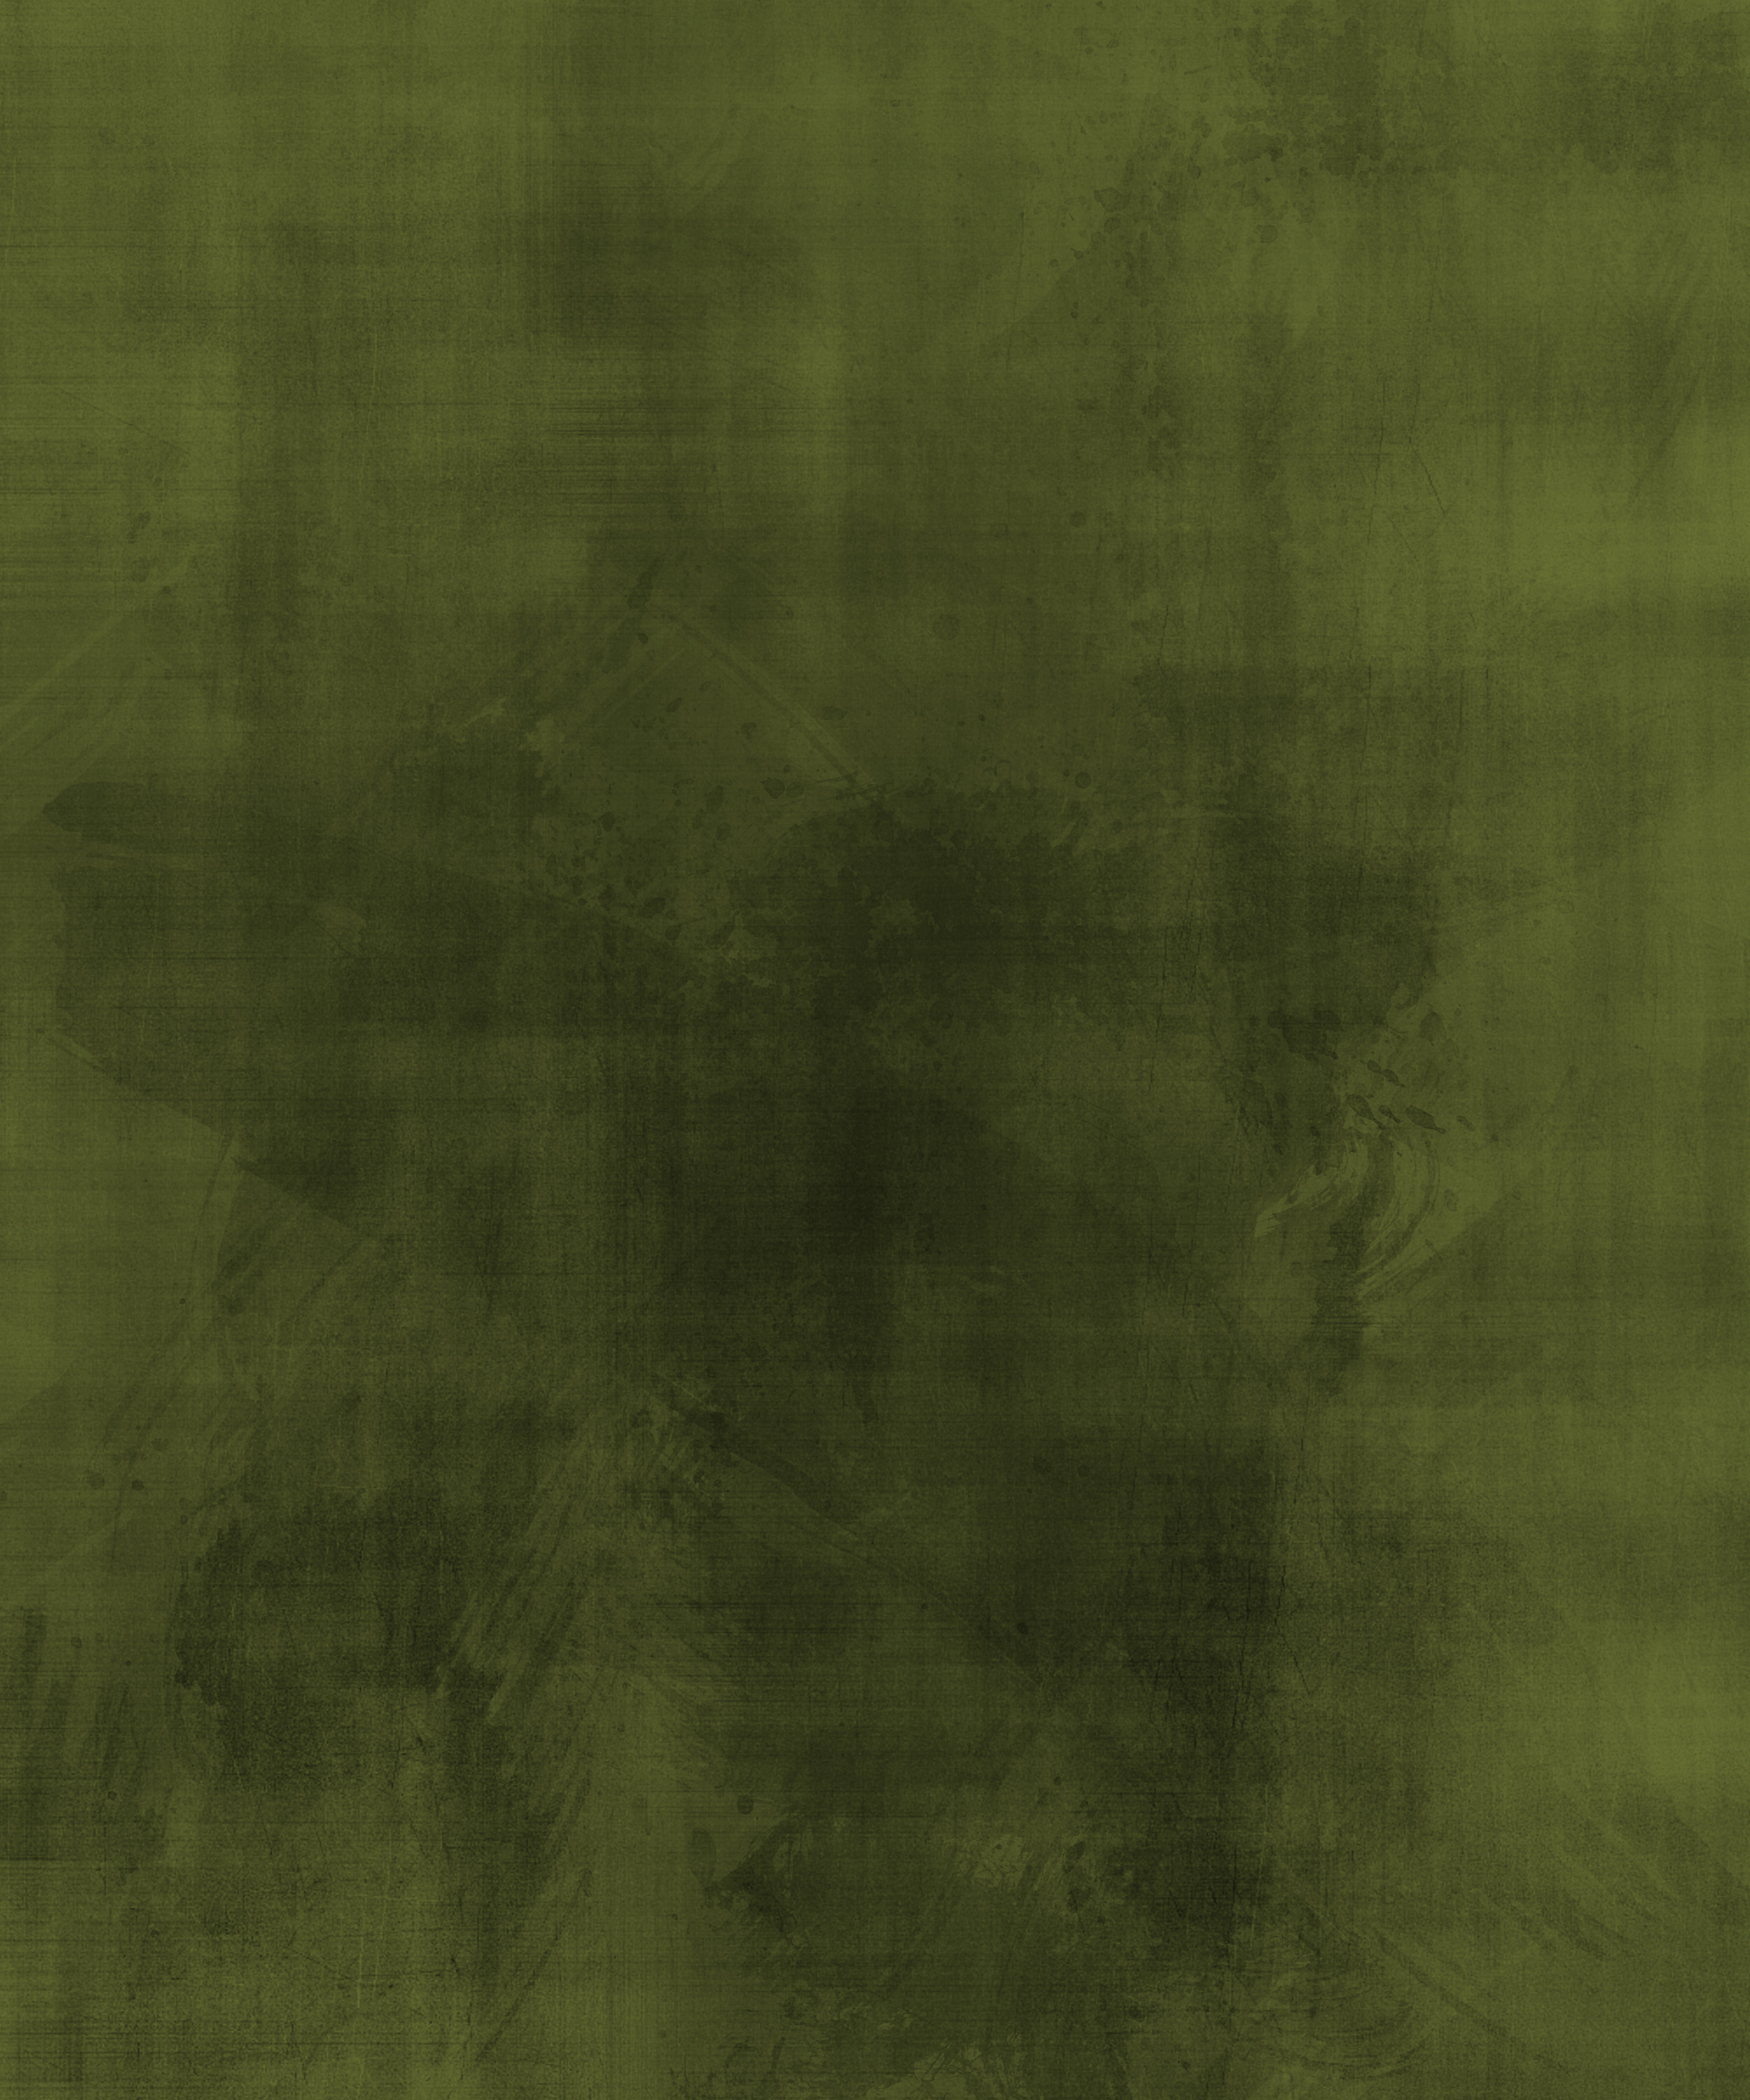 Green grunge texture background image, free download